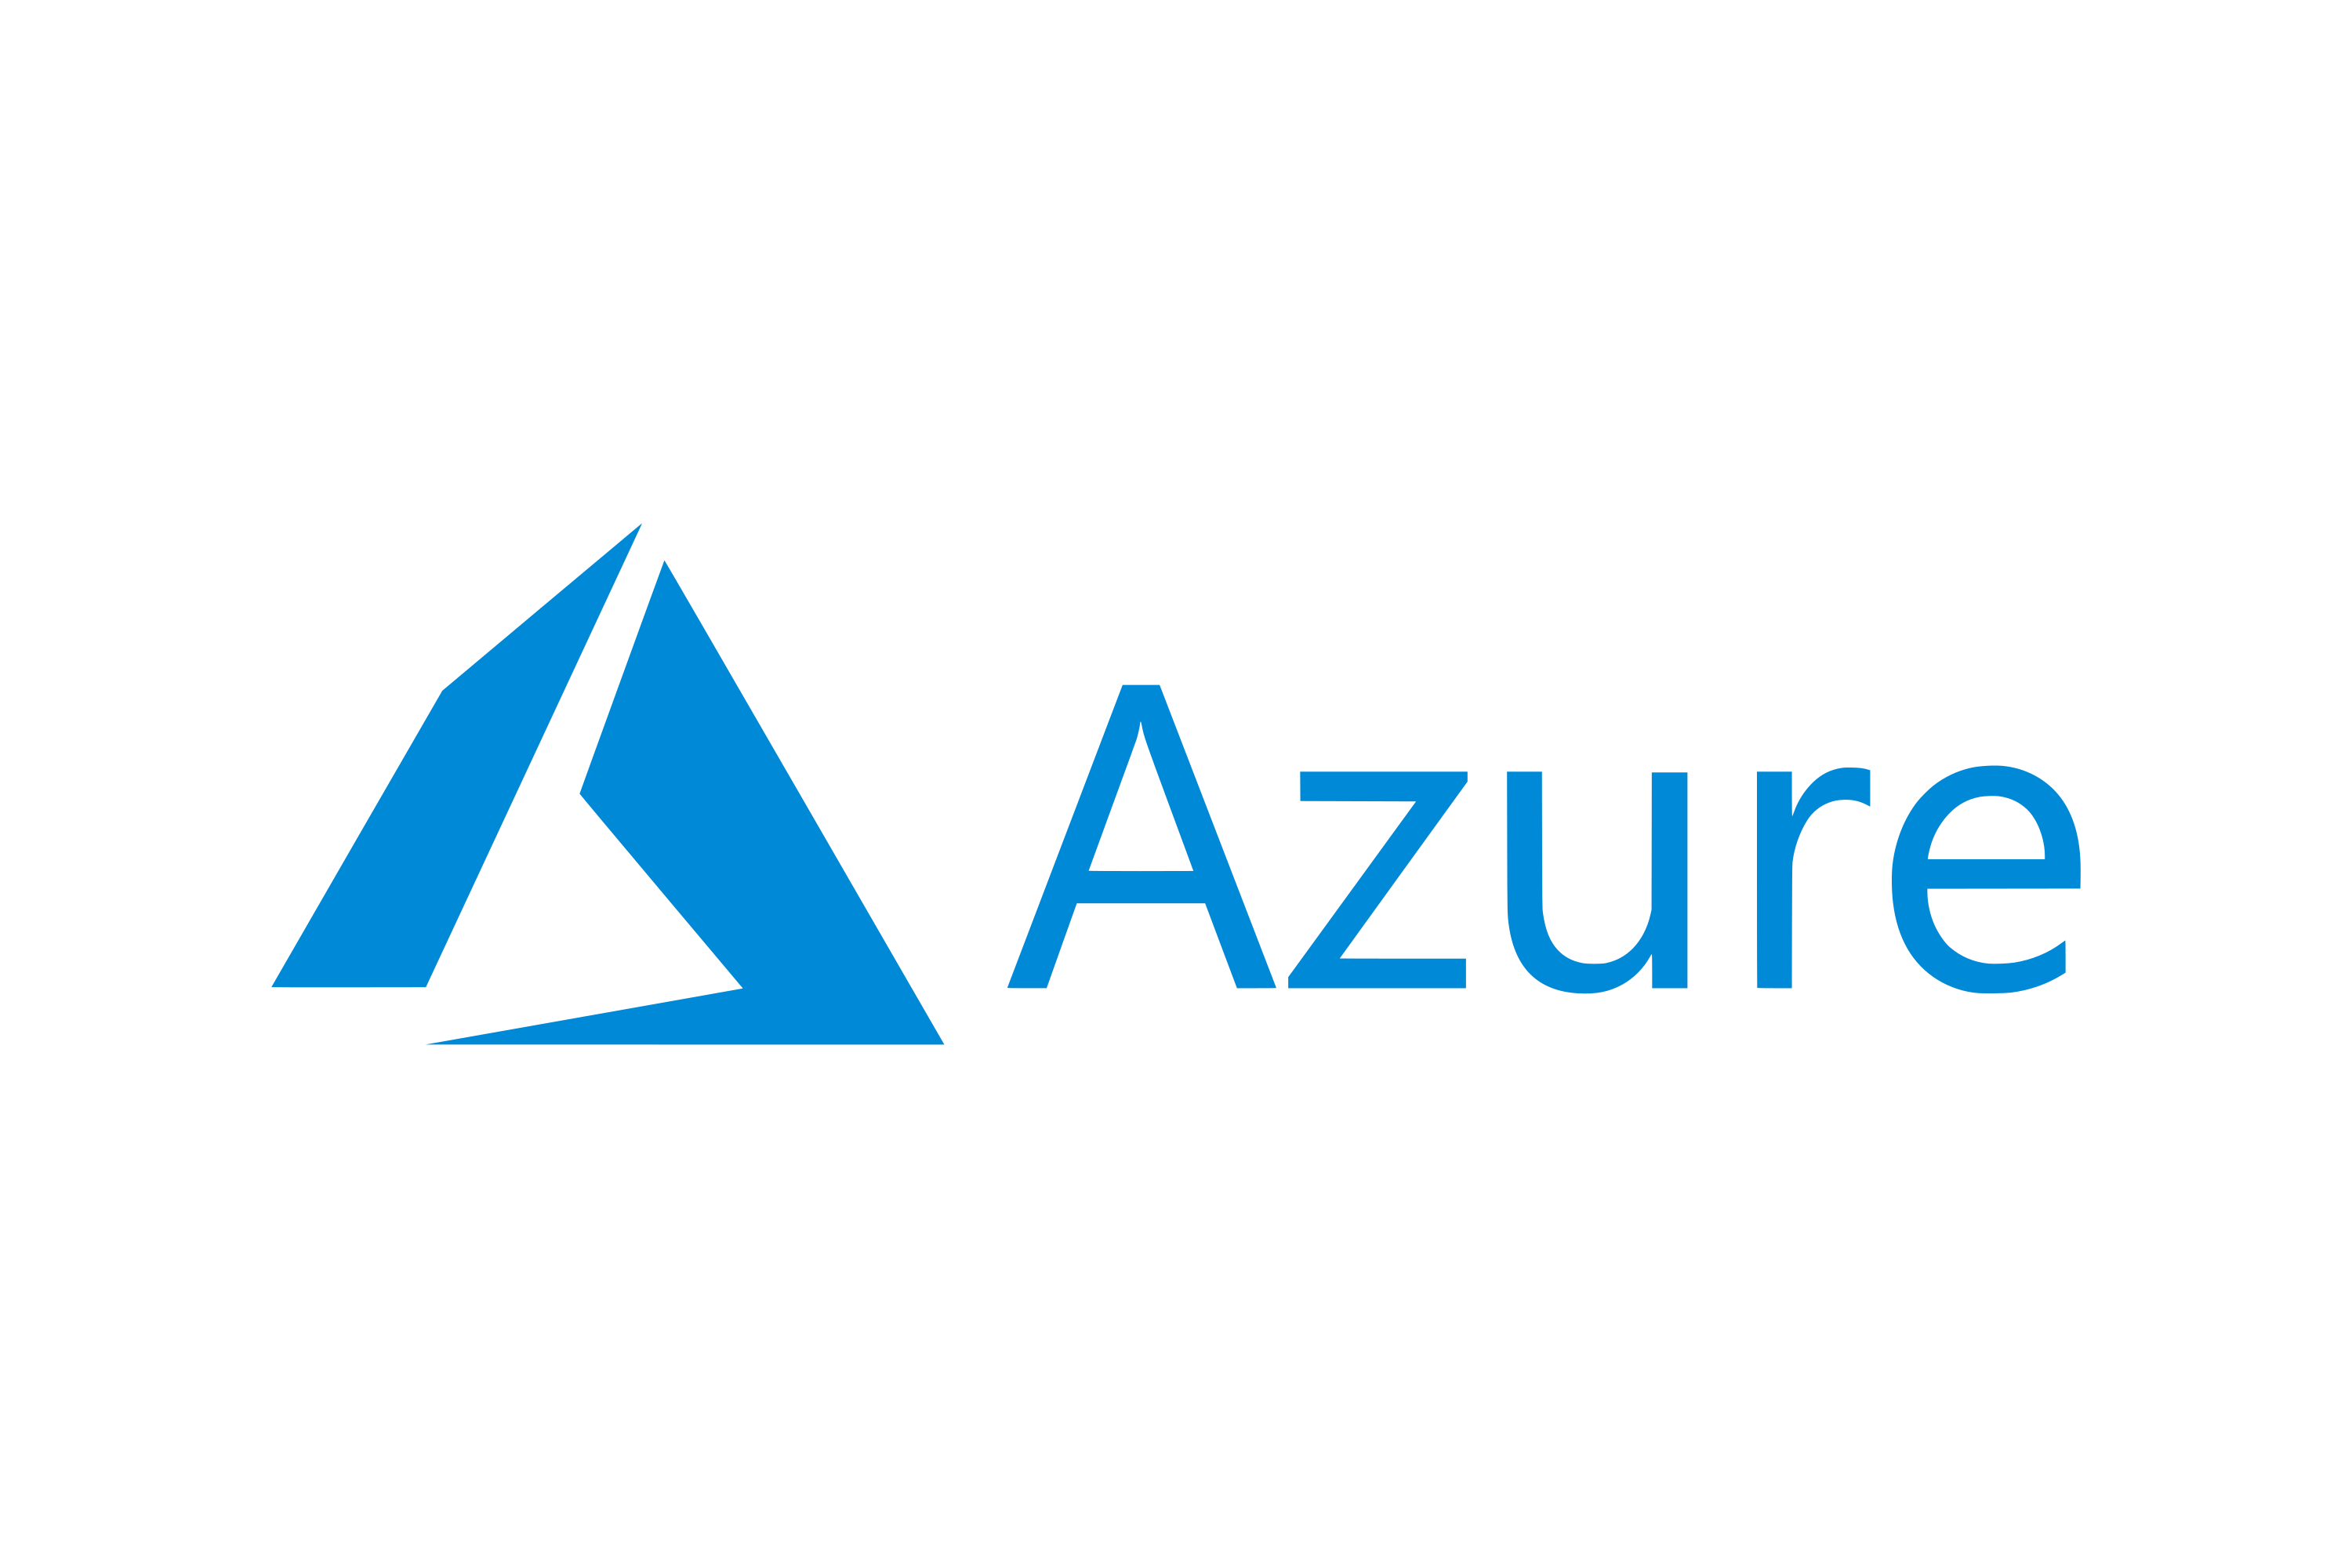 Microsoft-Azure-logo.png